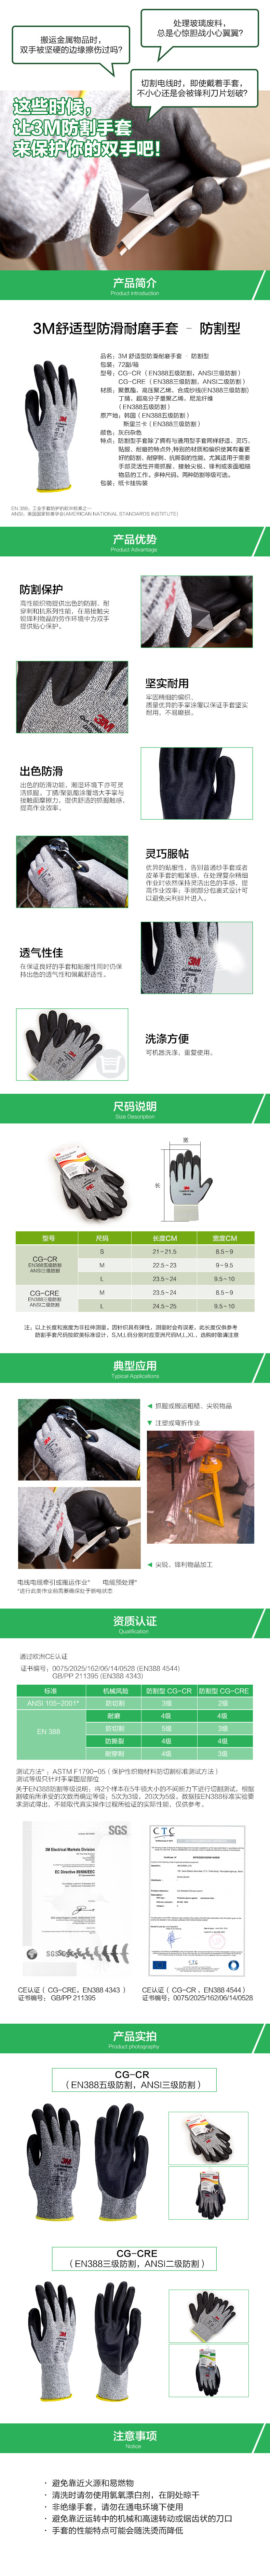 3M 舒适型防滑耐磨手套 防割型 L3 L 手套（WX300942421）（CG-CR 欧标5级防割 美标3级防割）